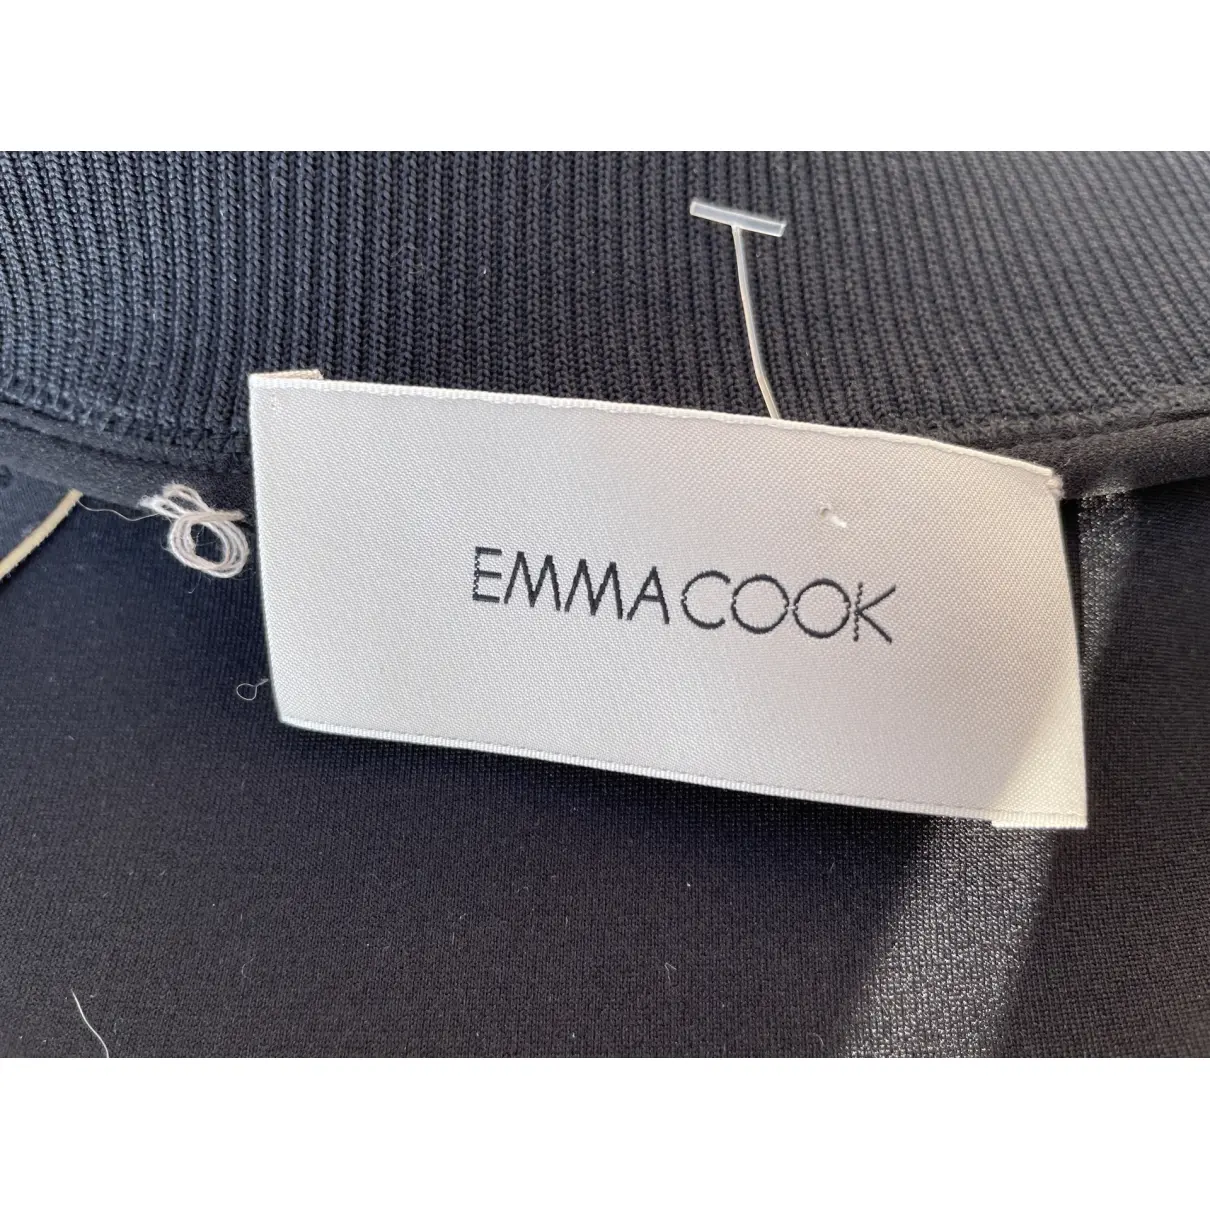 Buy Emma Cook Jacket online